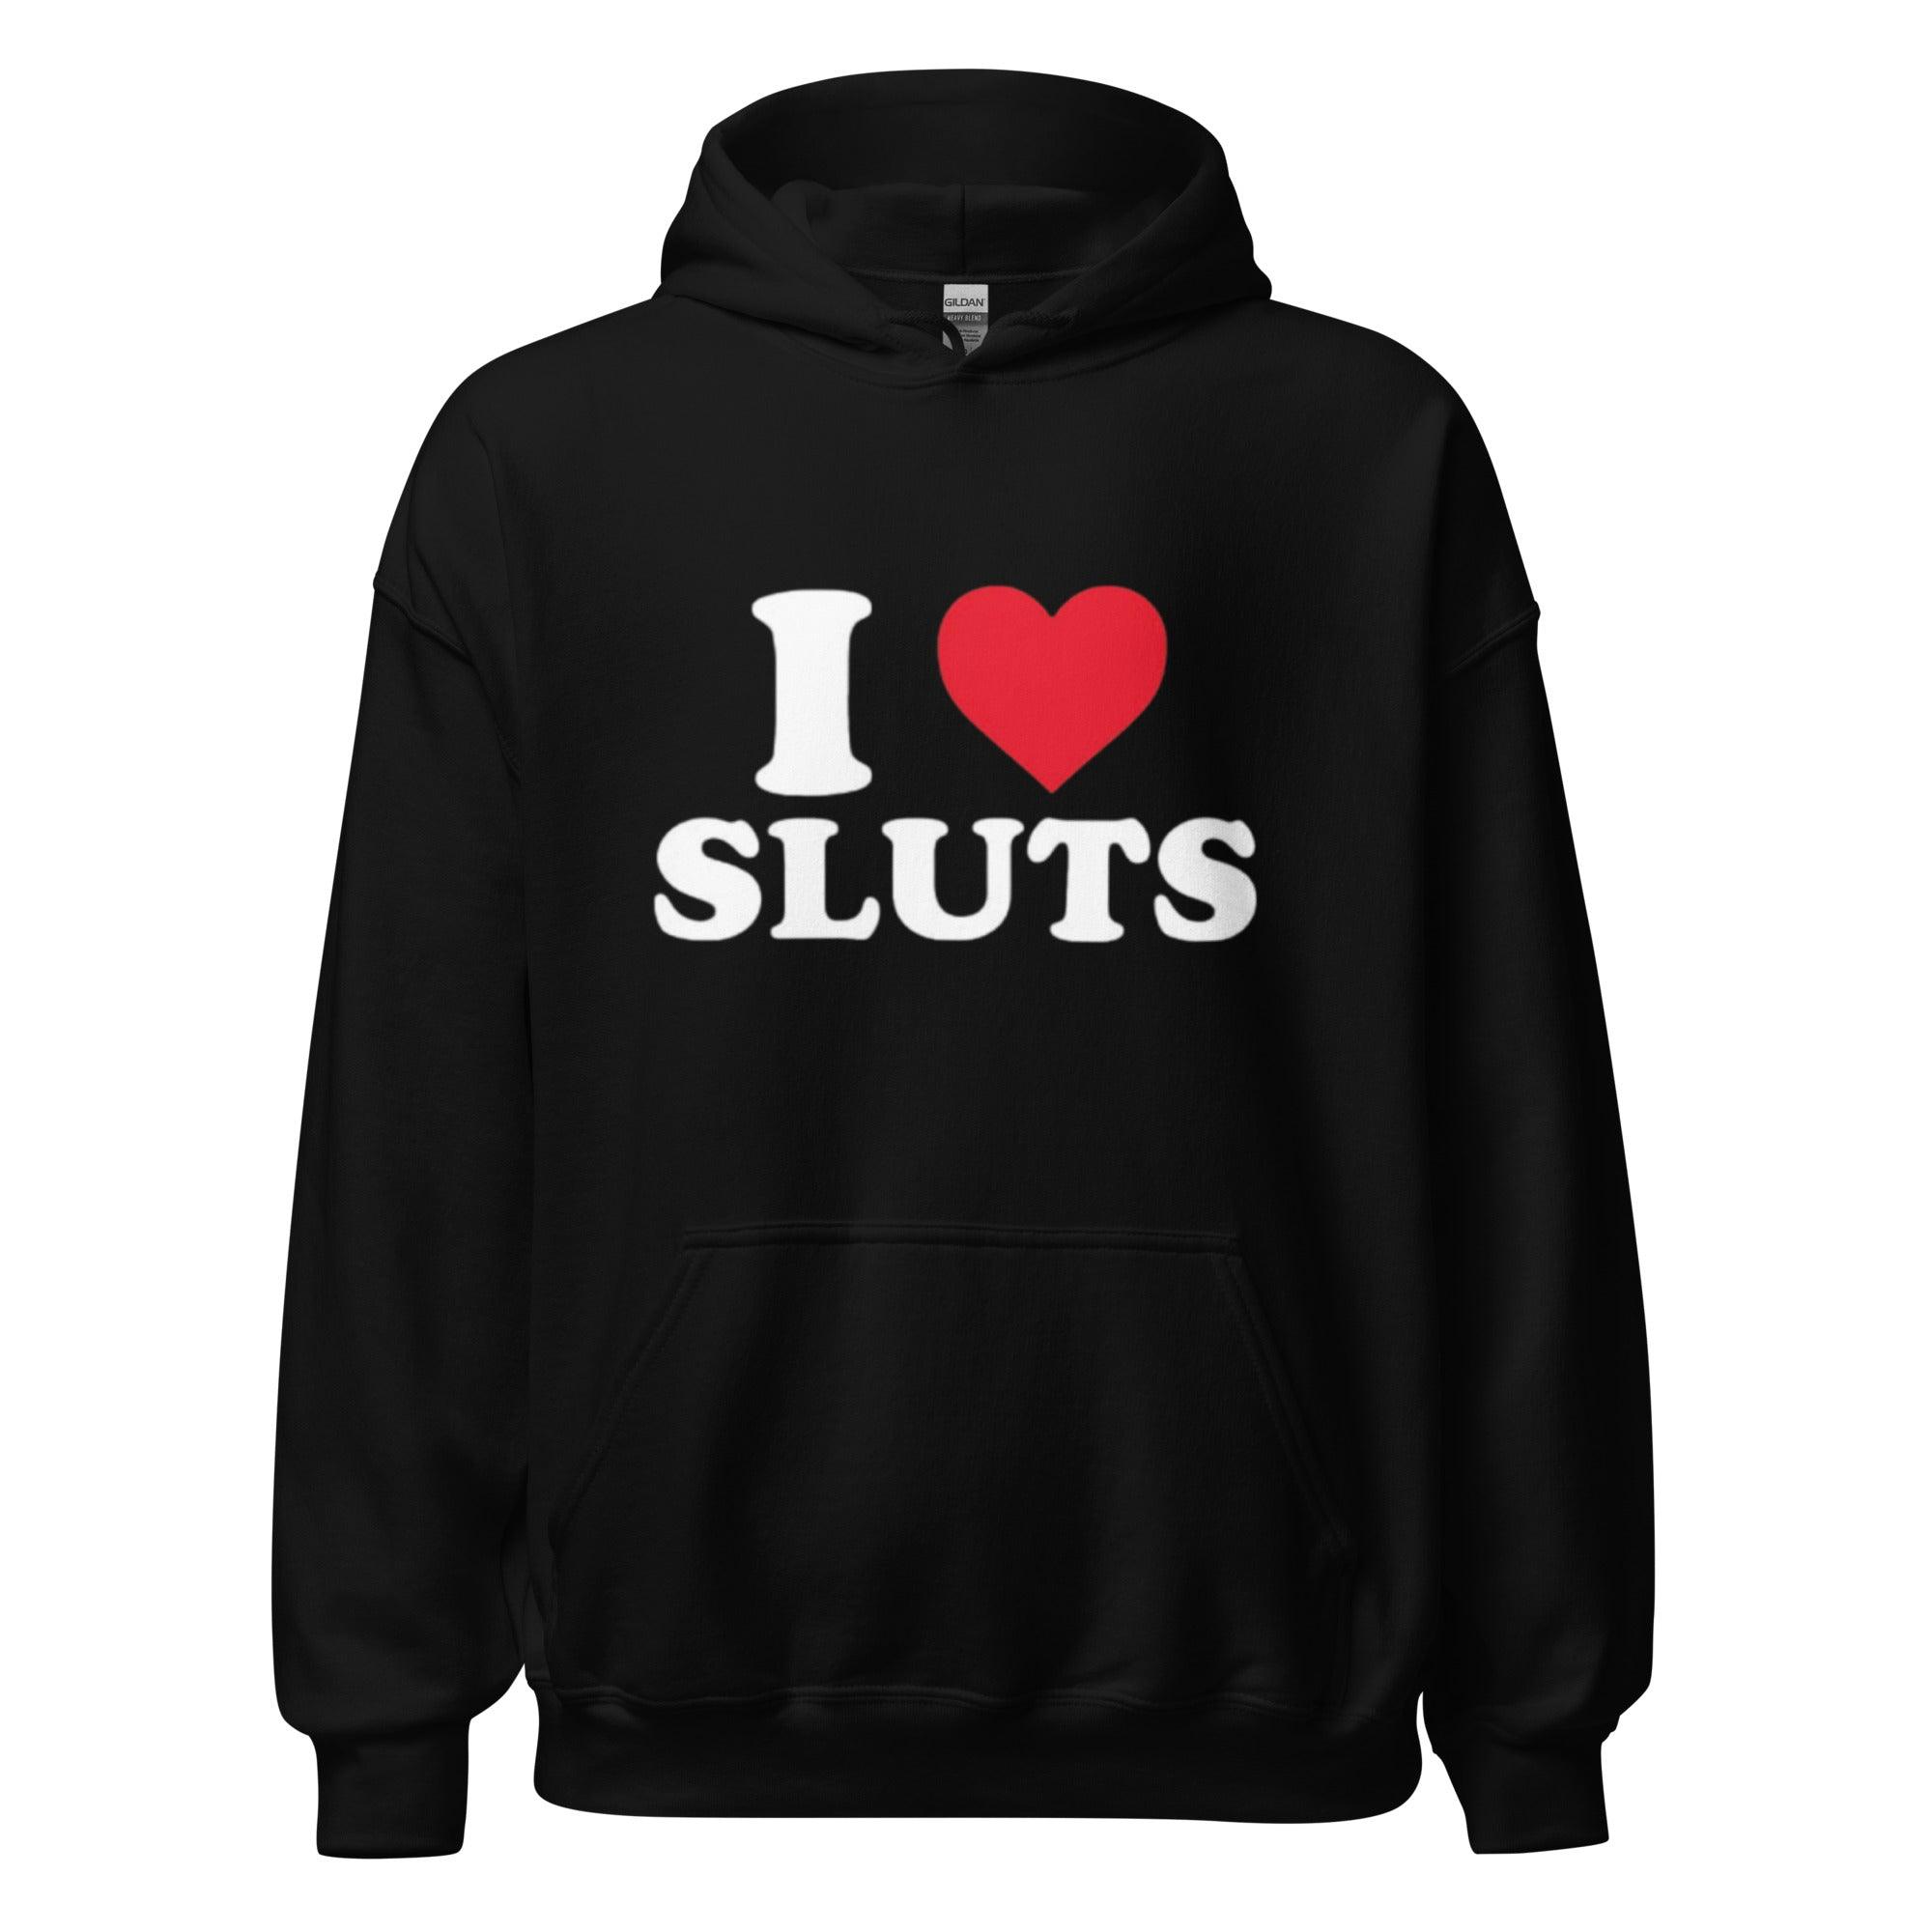 I Love Sluts Hoodie Top Koala Blended HeavyWeight Unisex Pullover - TopKoalaTee